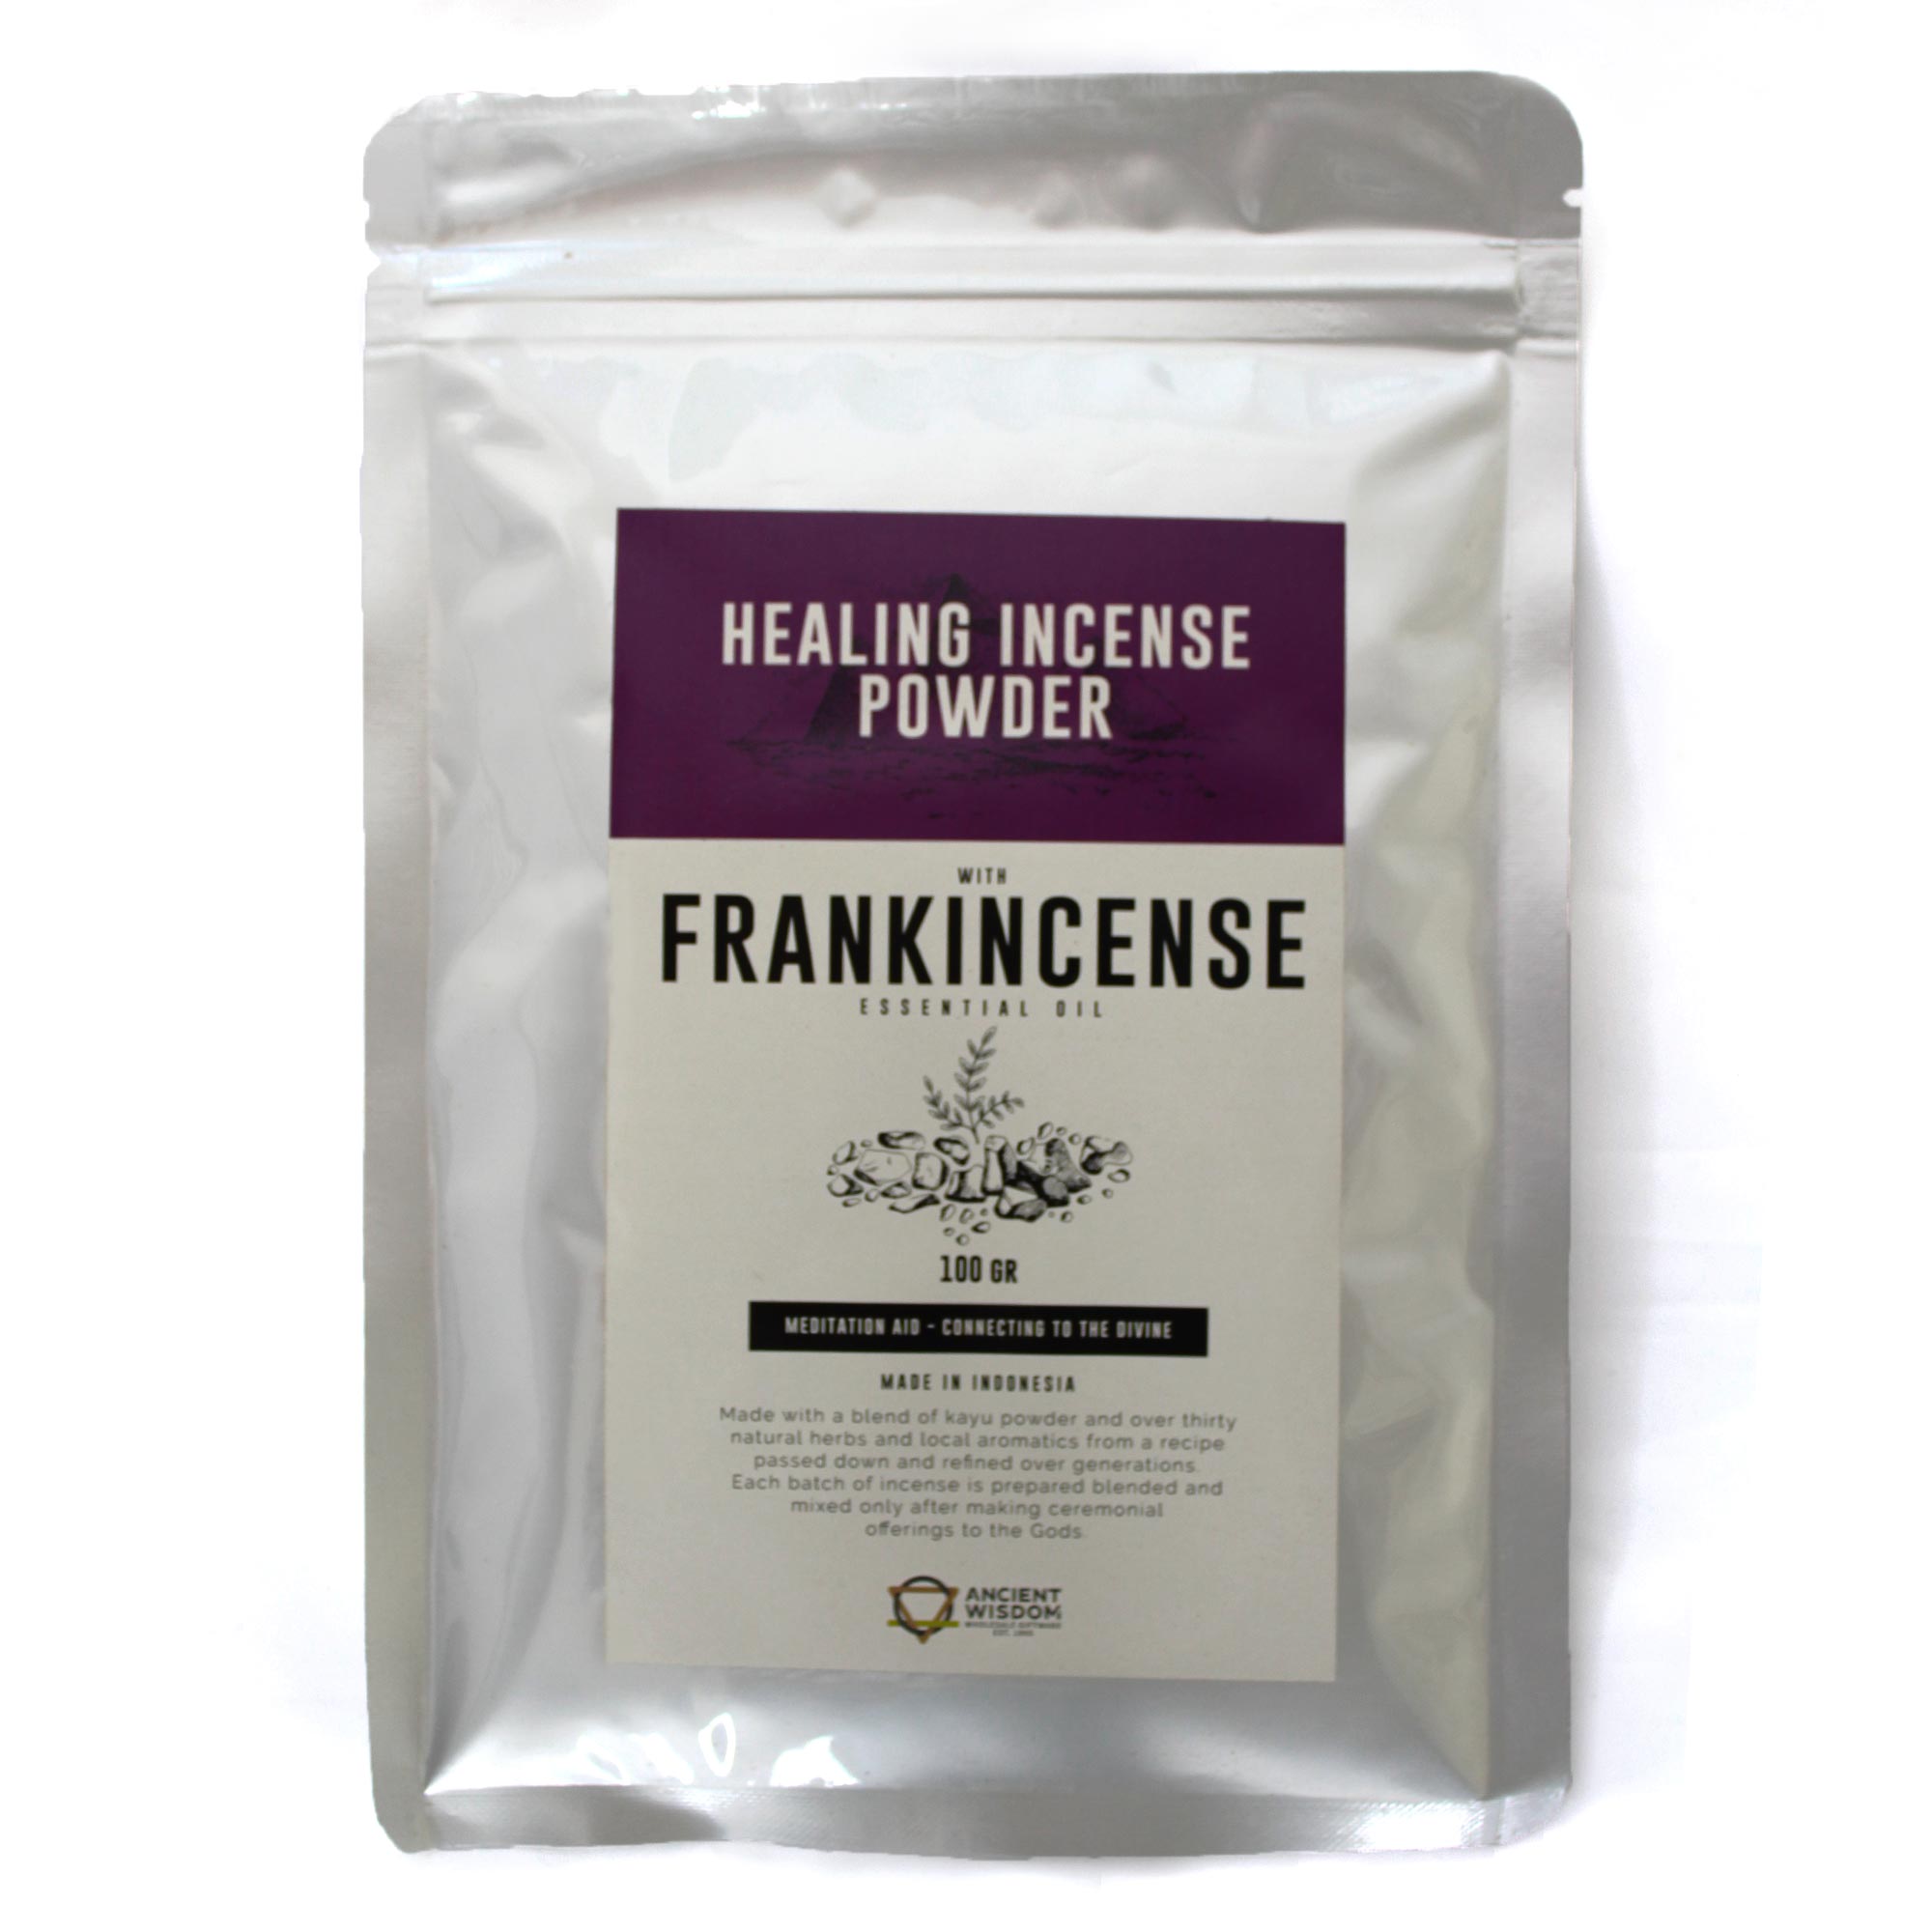 View Healing Incense Powder Frankincense 100gm information